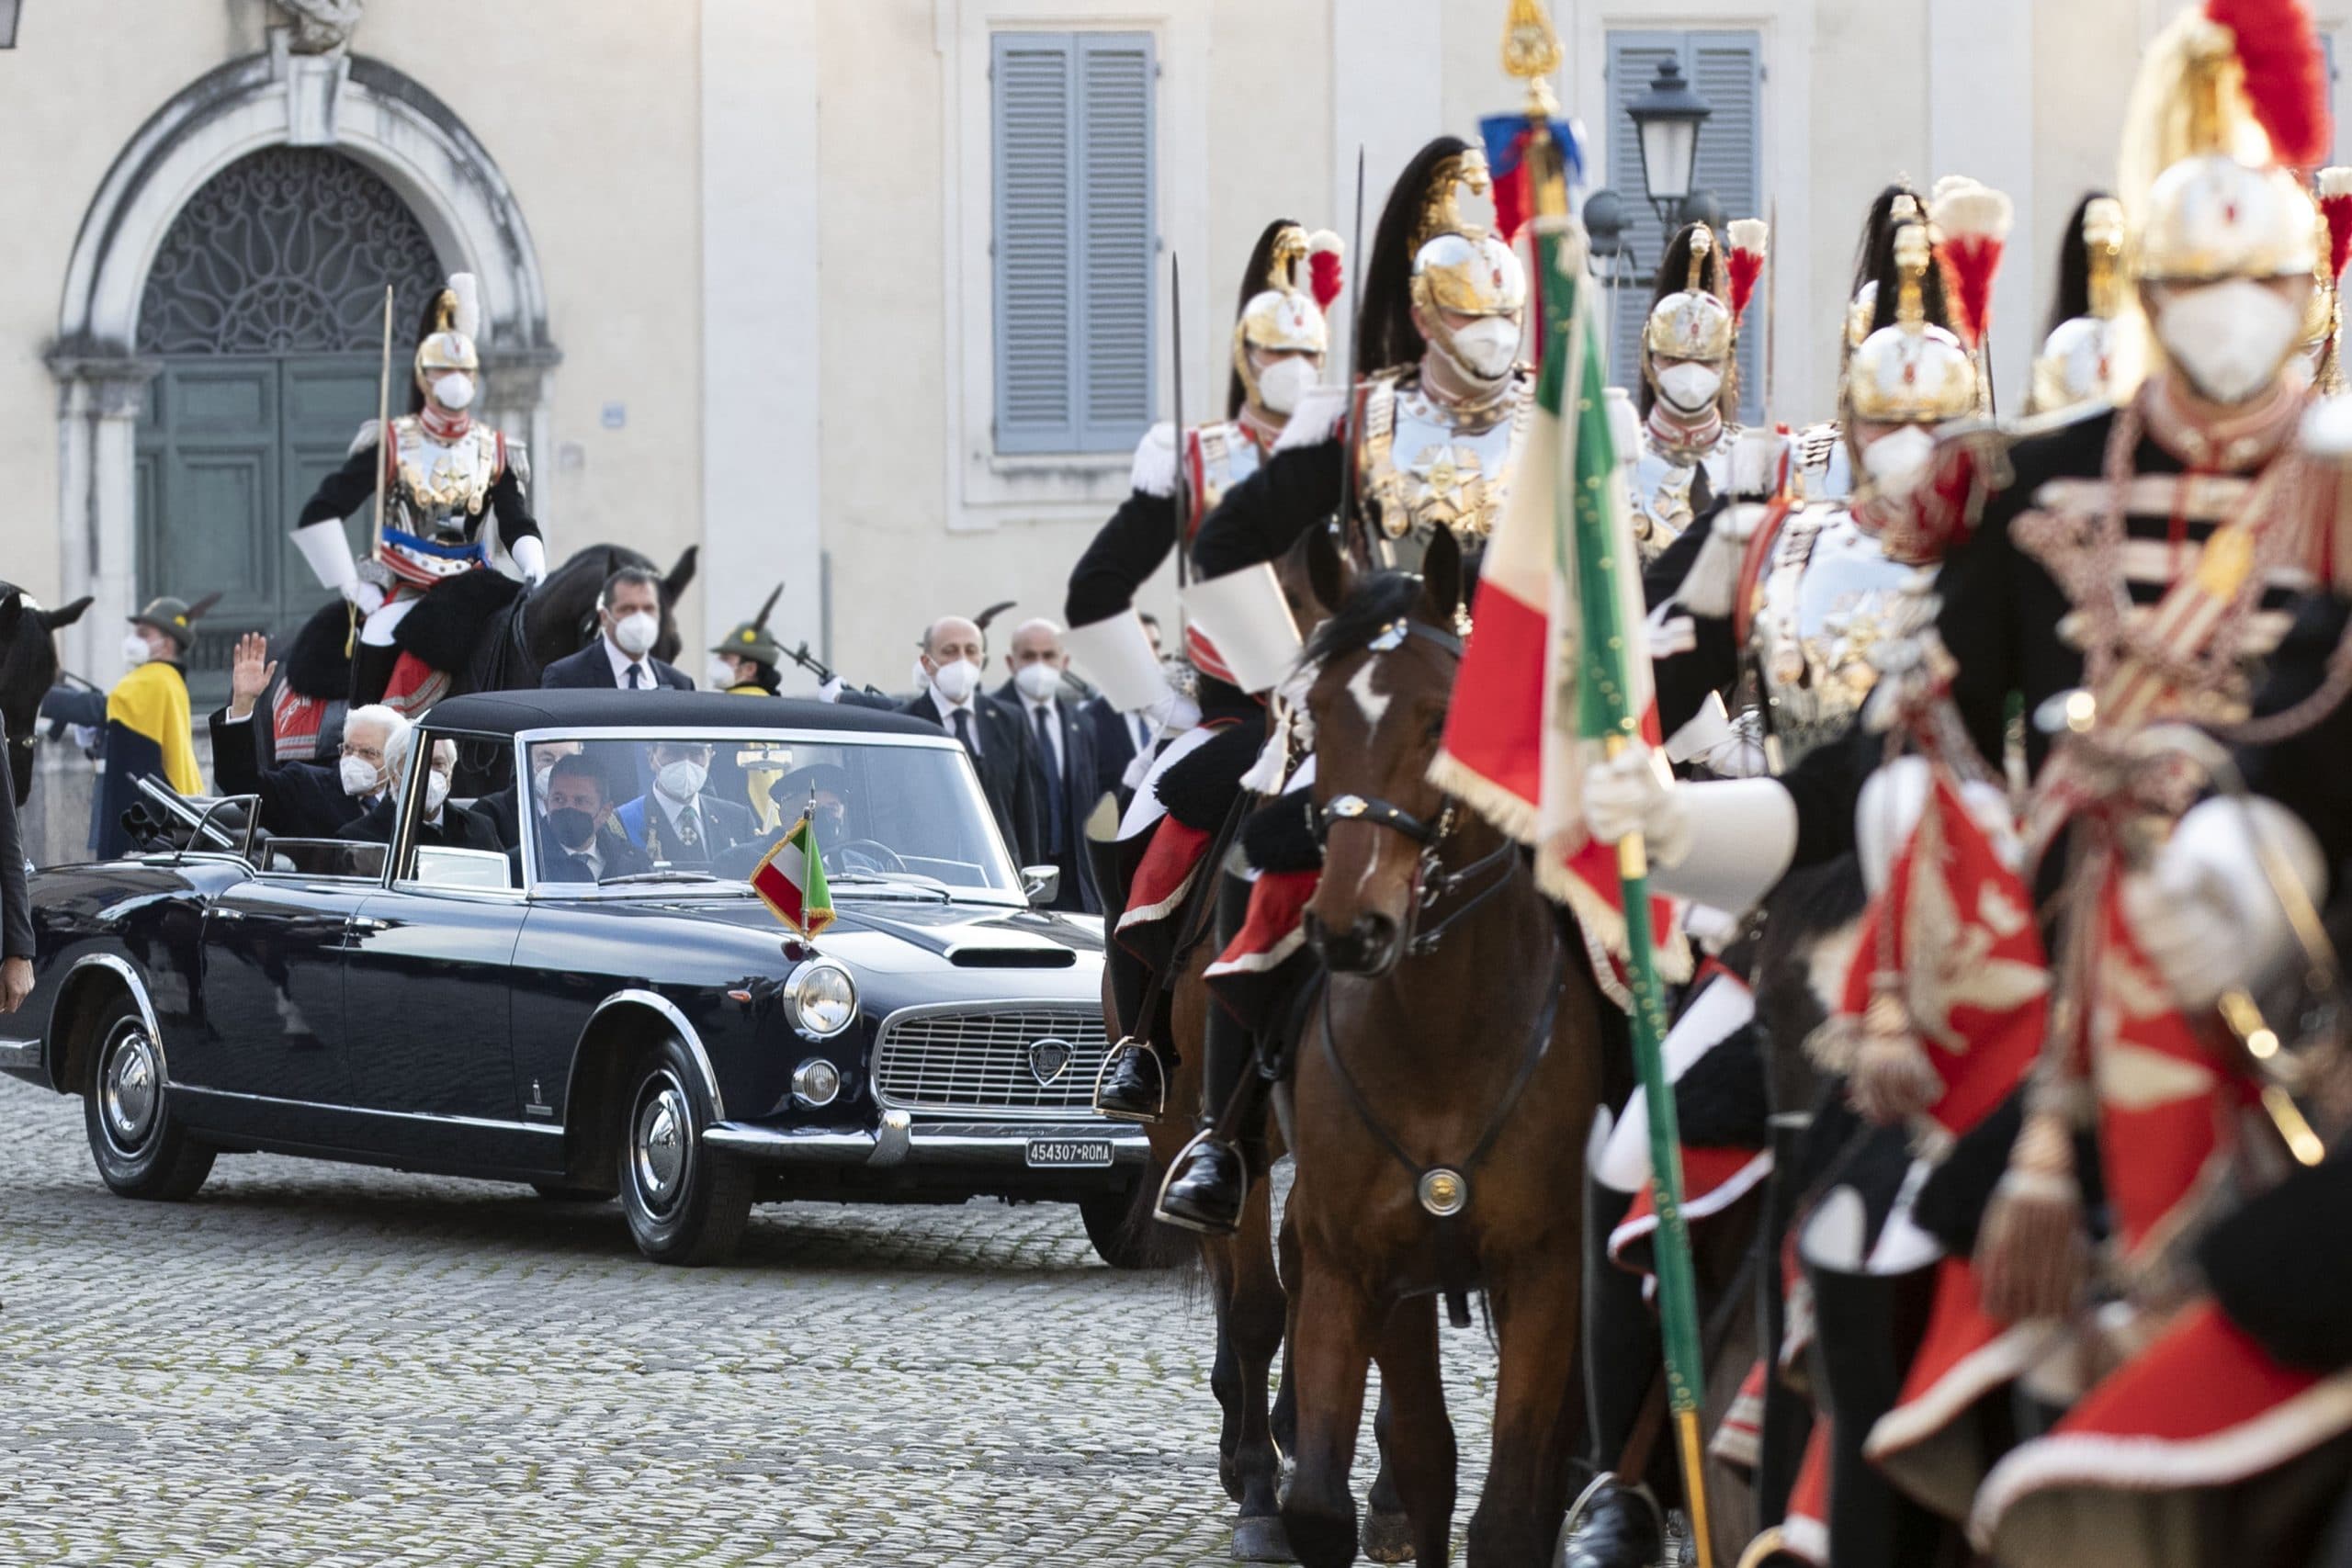 01 Lancia Flaminia Presidenziale scaled Ο Πρόεδρος της Ιταλικής Δημοκρατίας, επιστρέφει στο Palazzo del Quirinale με την Lancia Flaminia